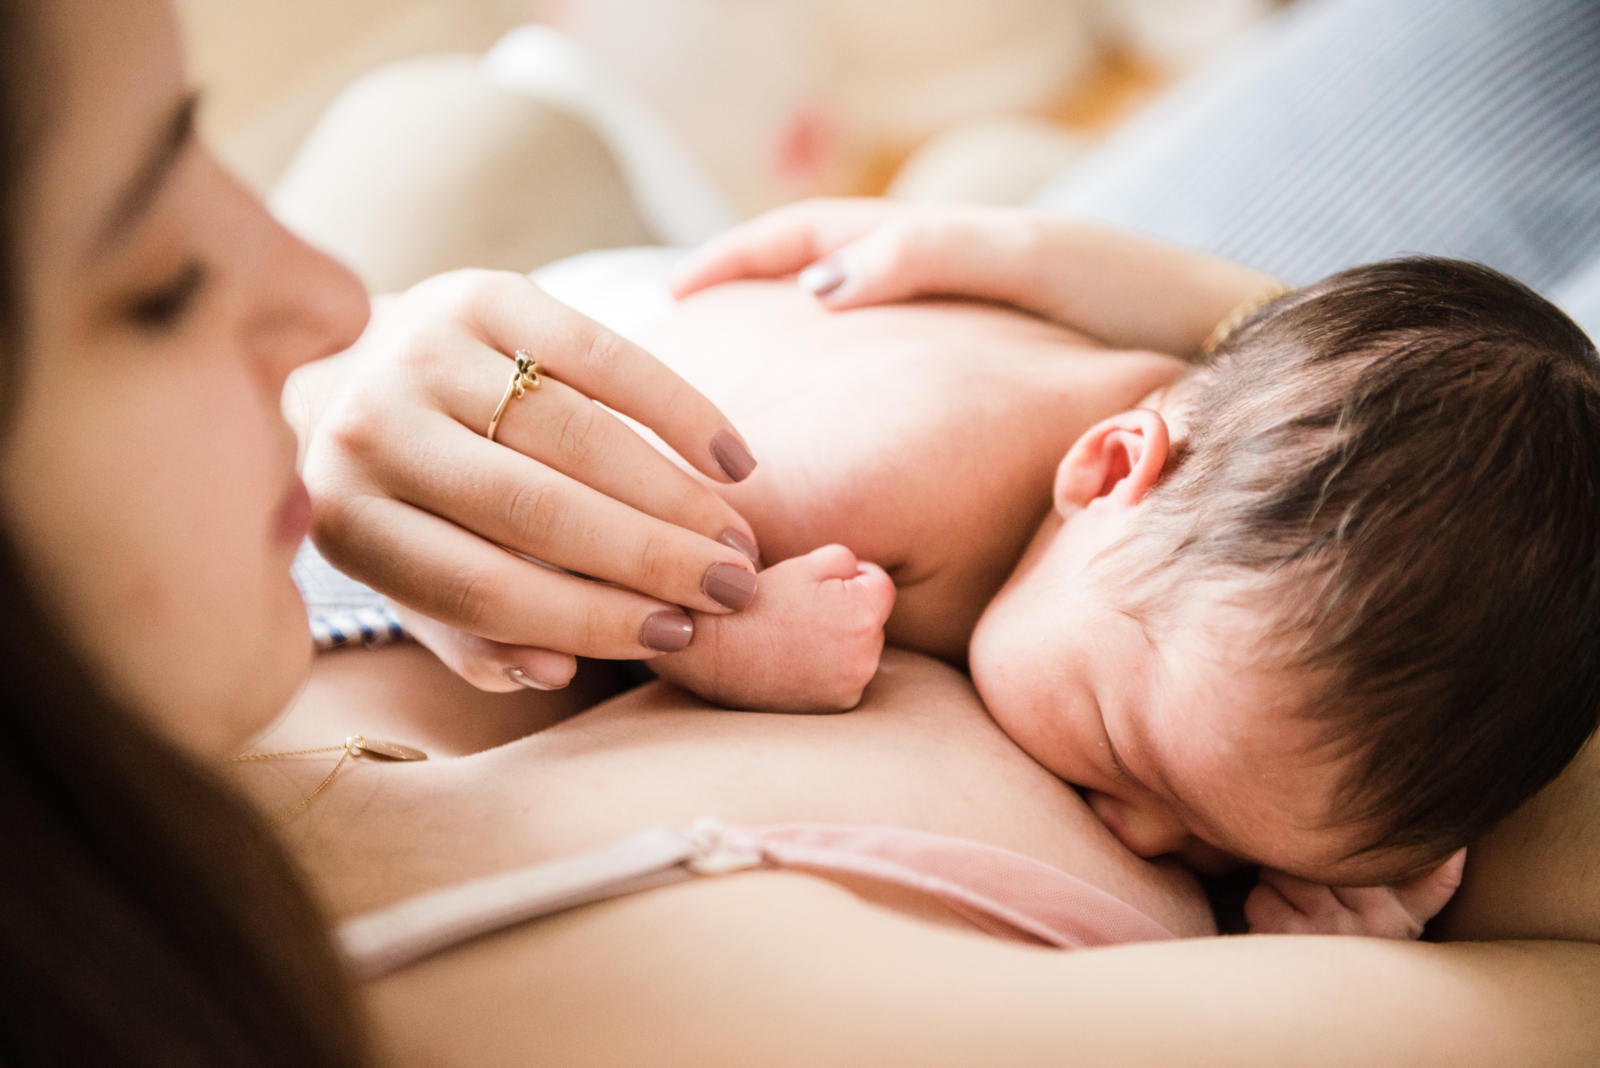 c-section birth newborn first time mom advice